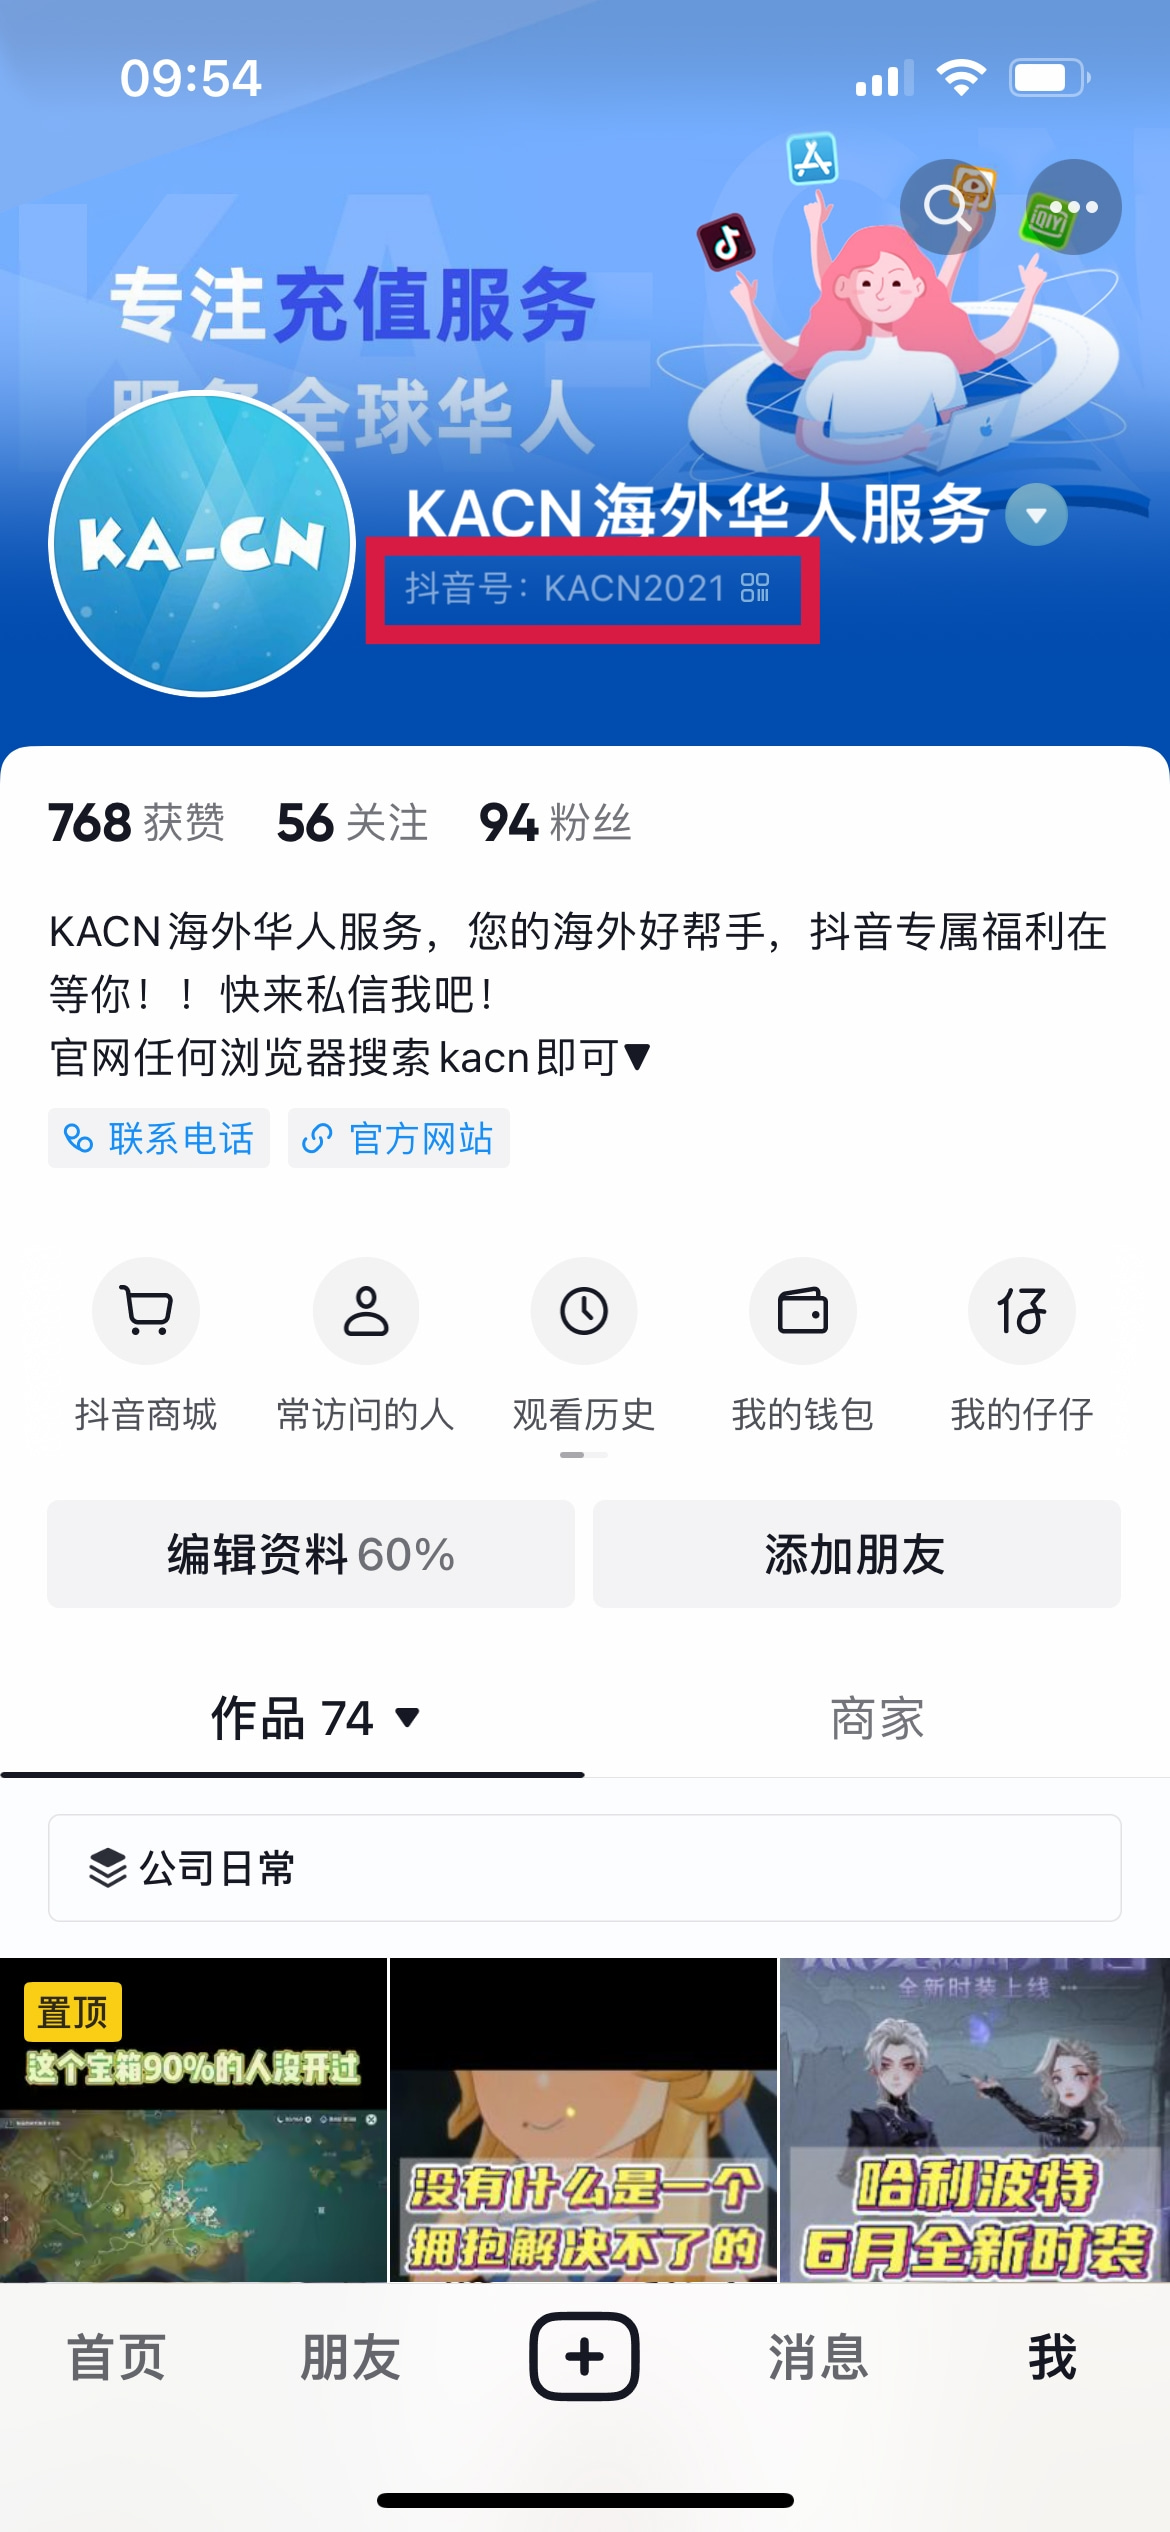 KA-CN的抖音账号页面